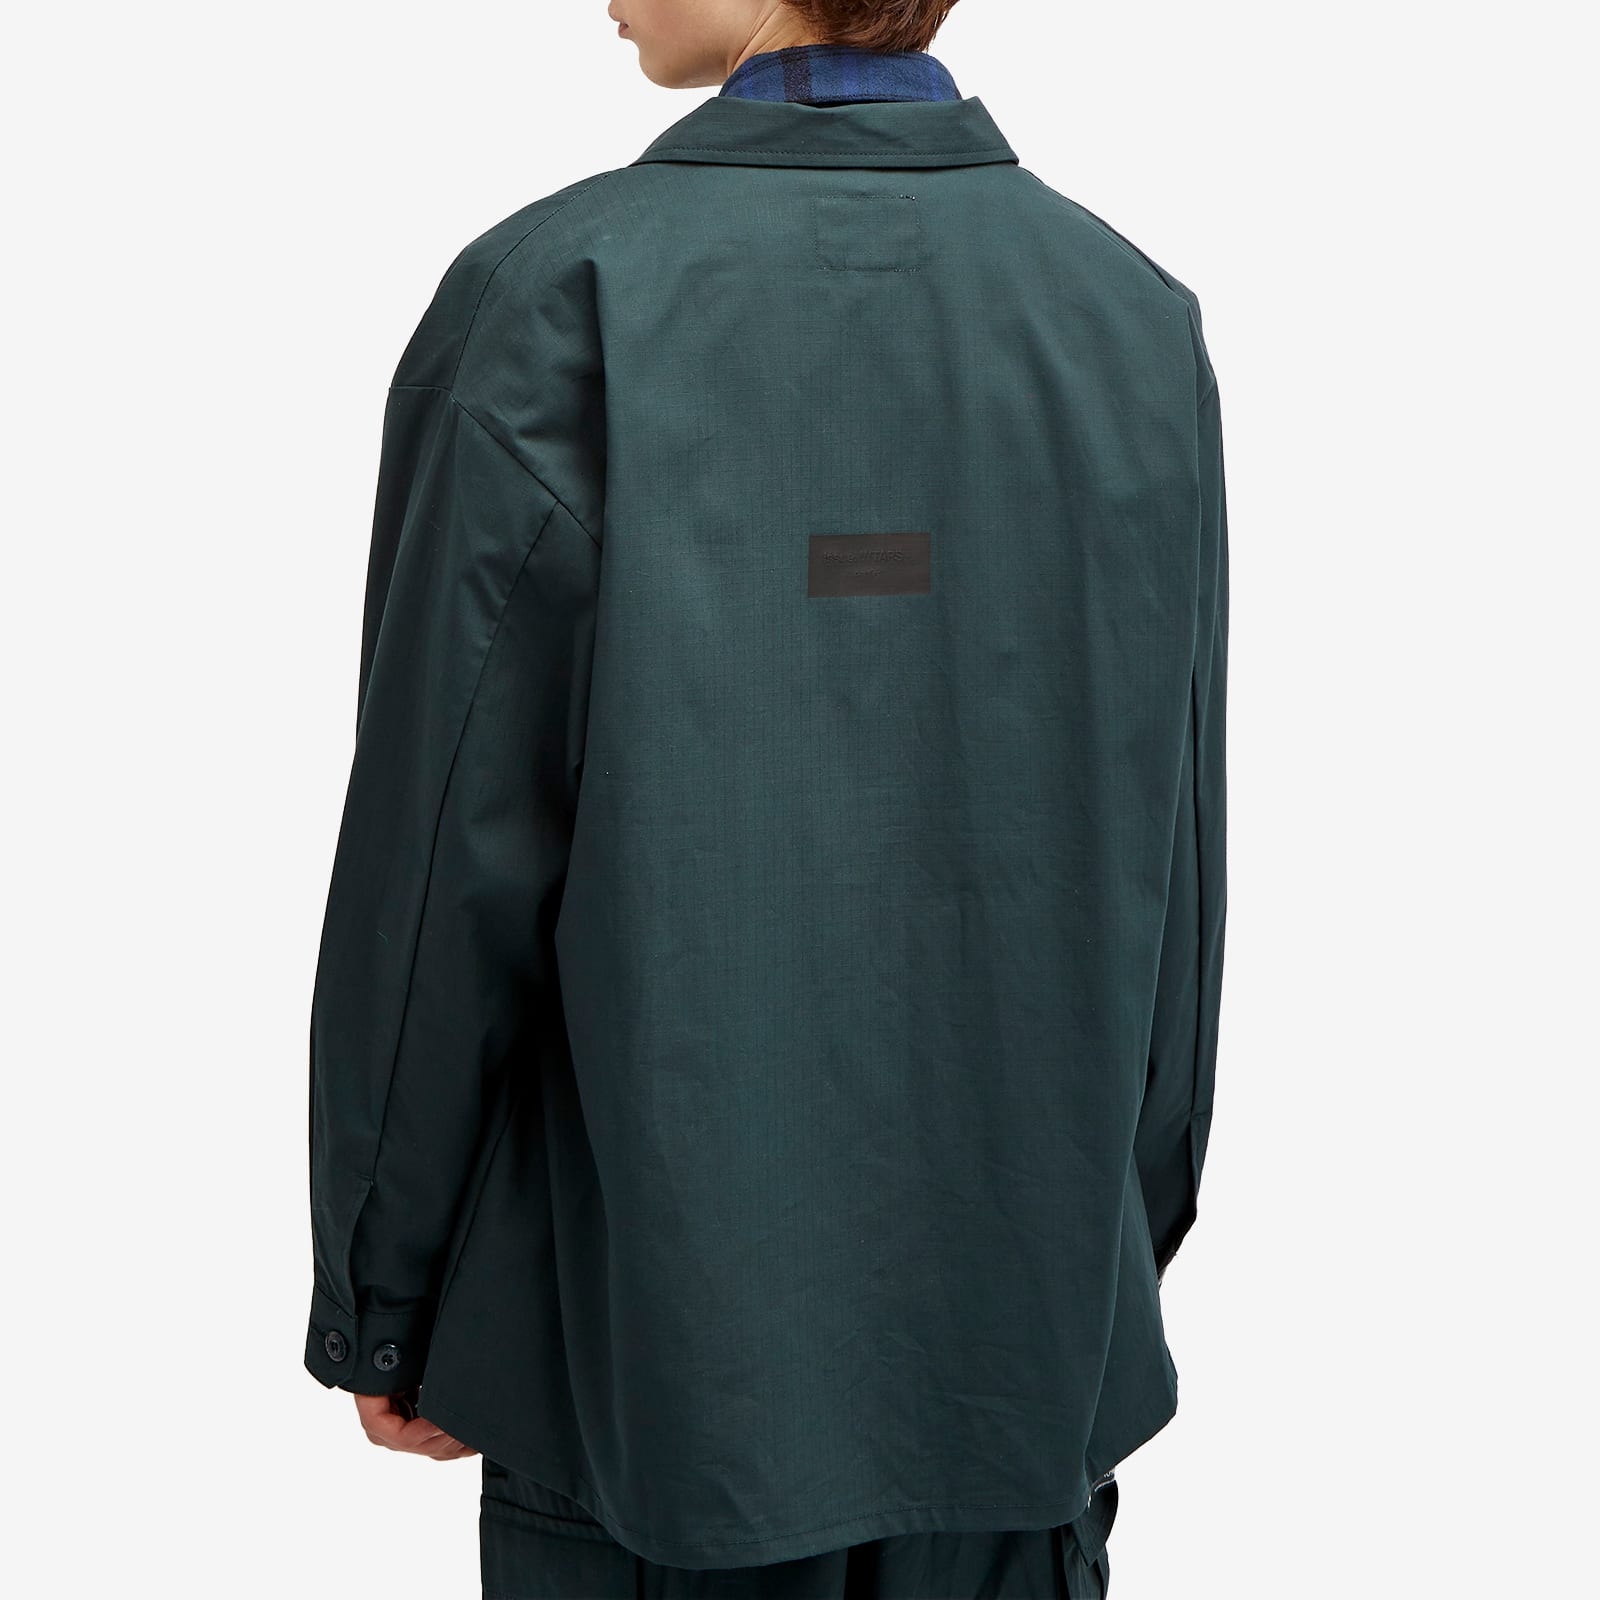 WTAPS 17 Shirt Jacket - 3